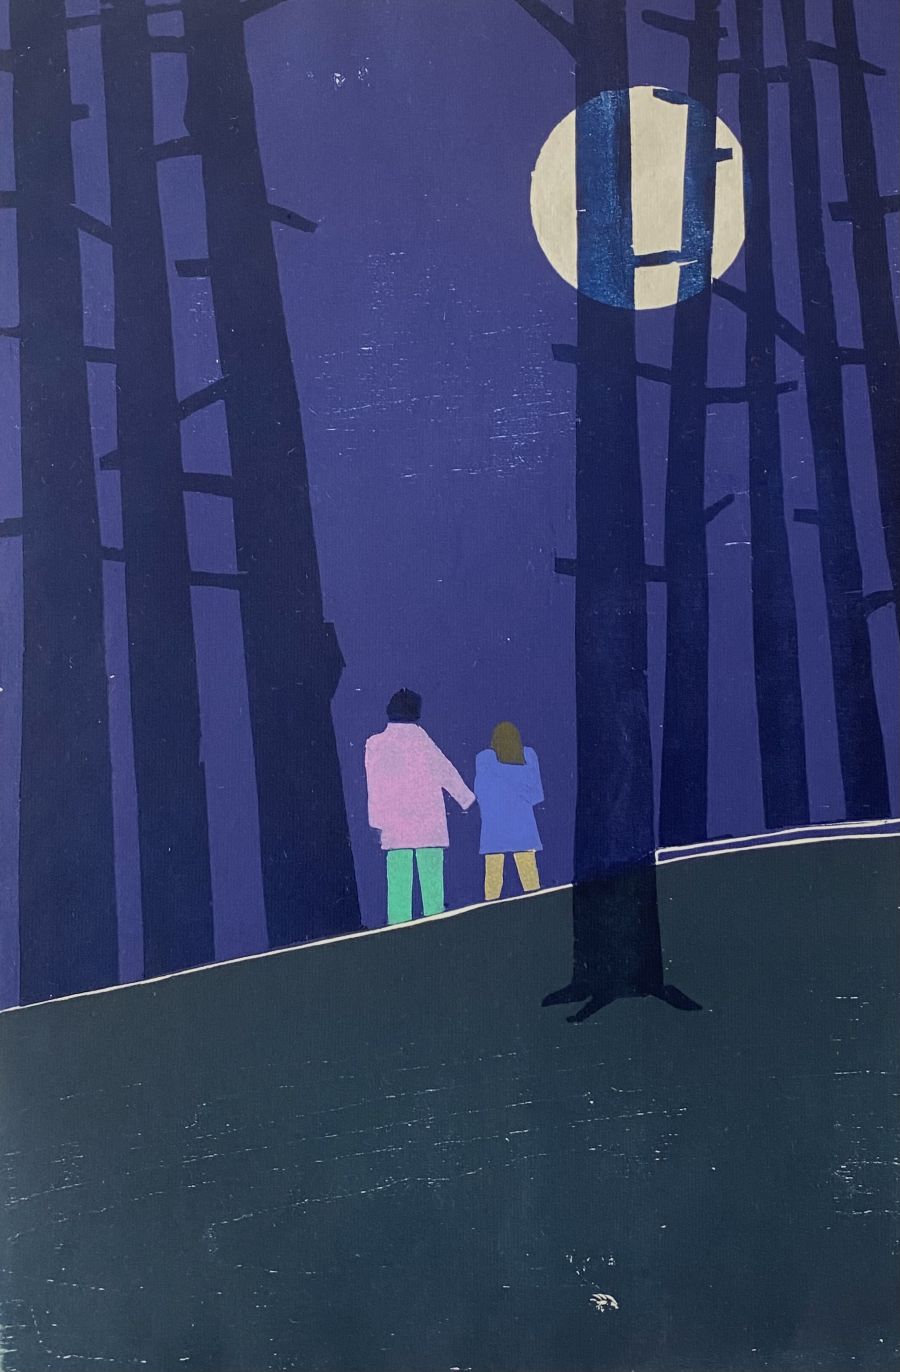 Two figures walking in the moon lit woods.